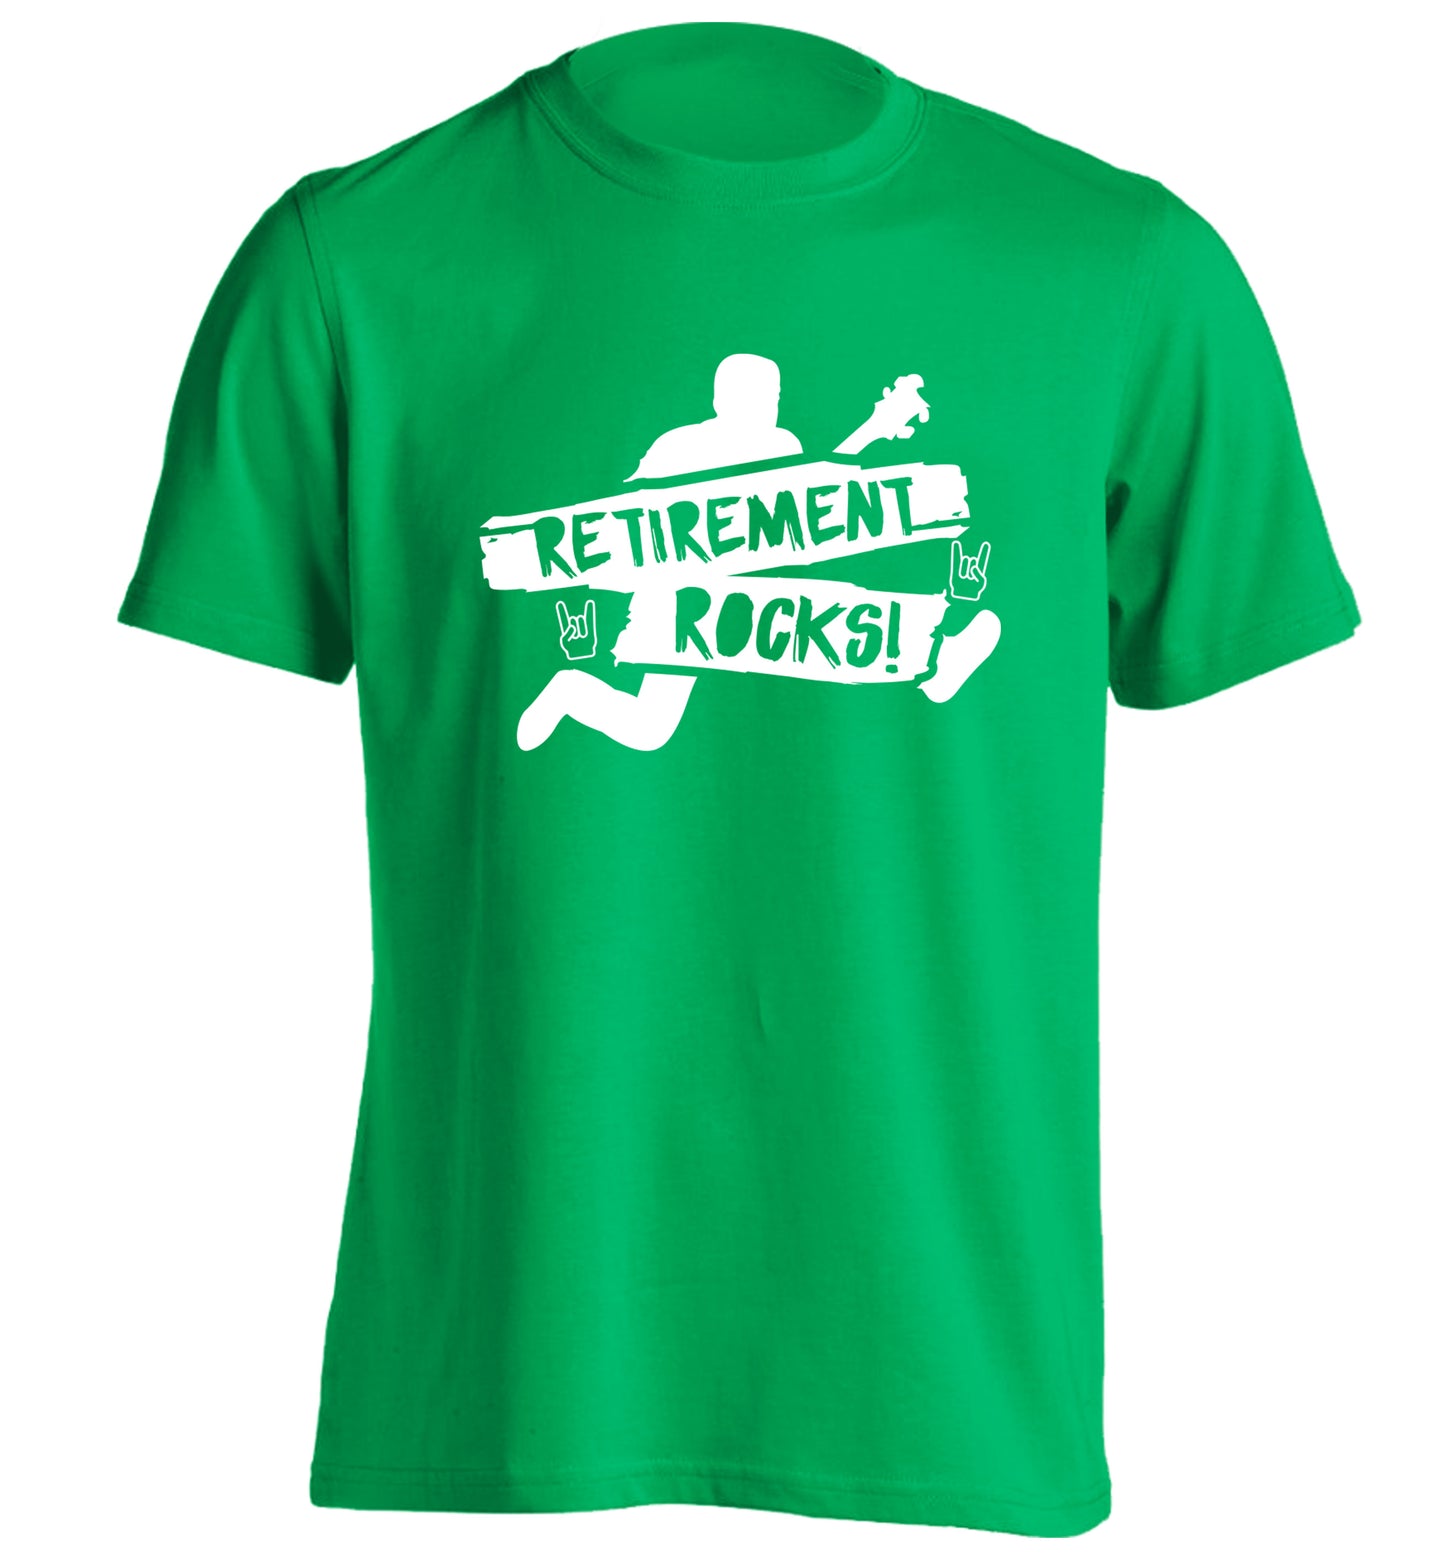 Retirement Rocks adults unisex green Tshirt 2XL